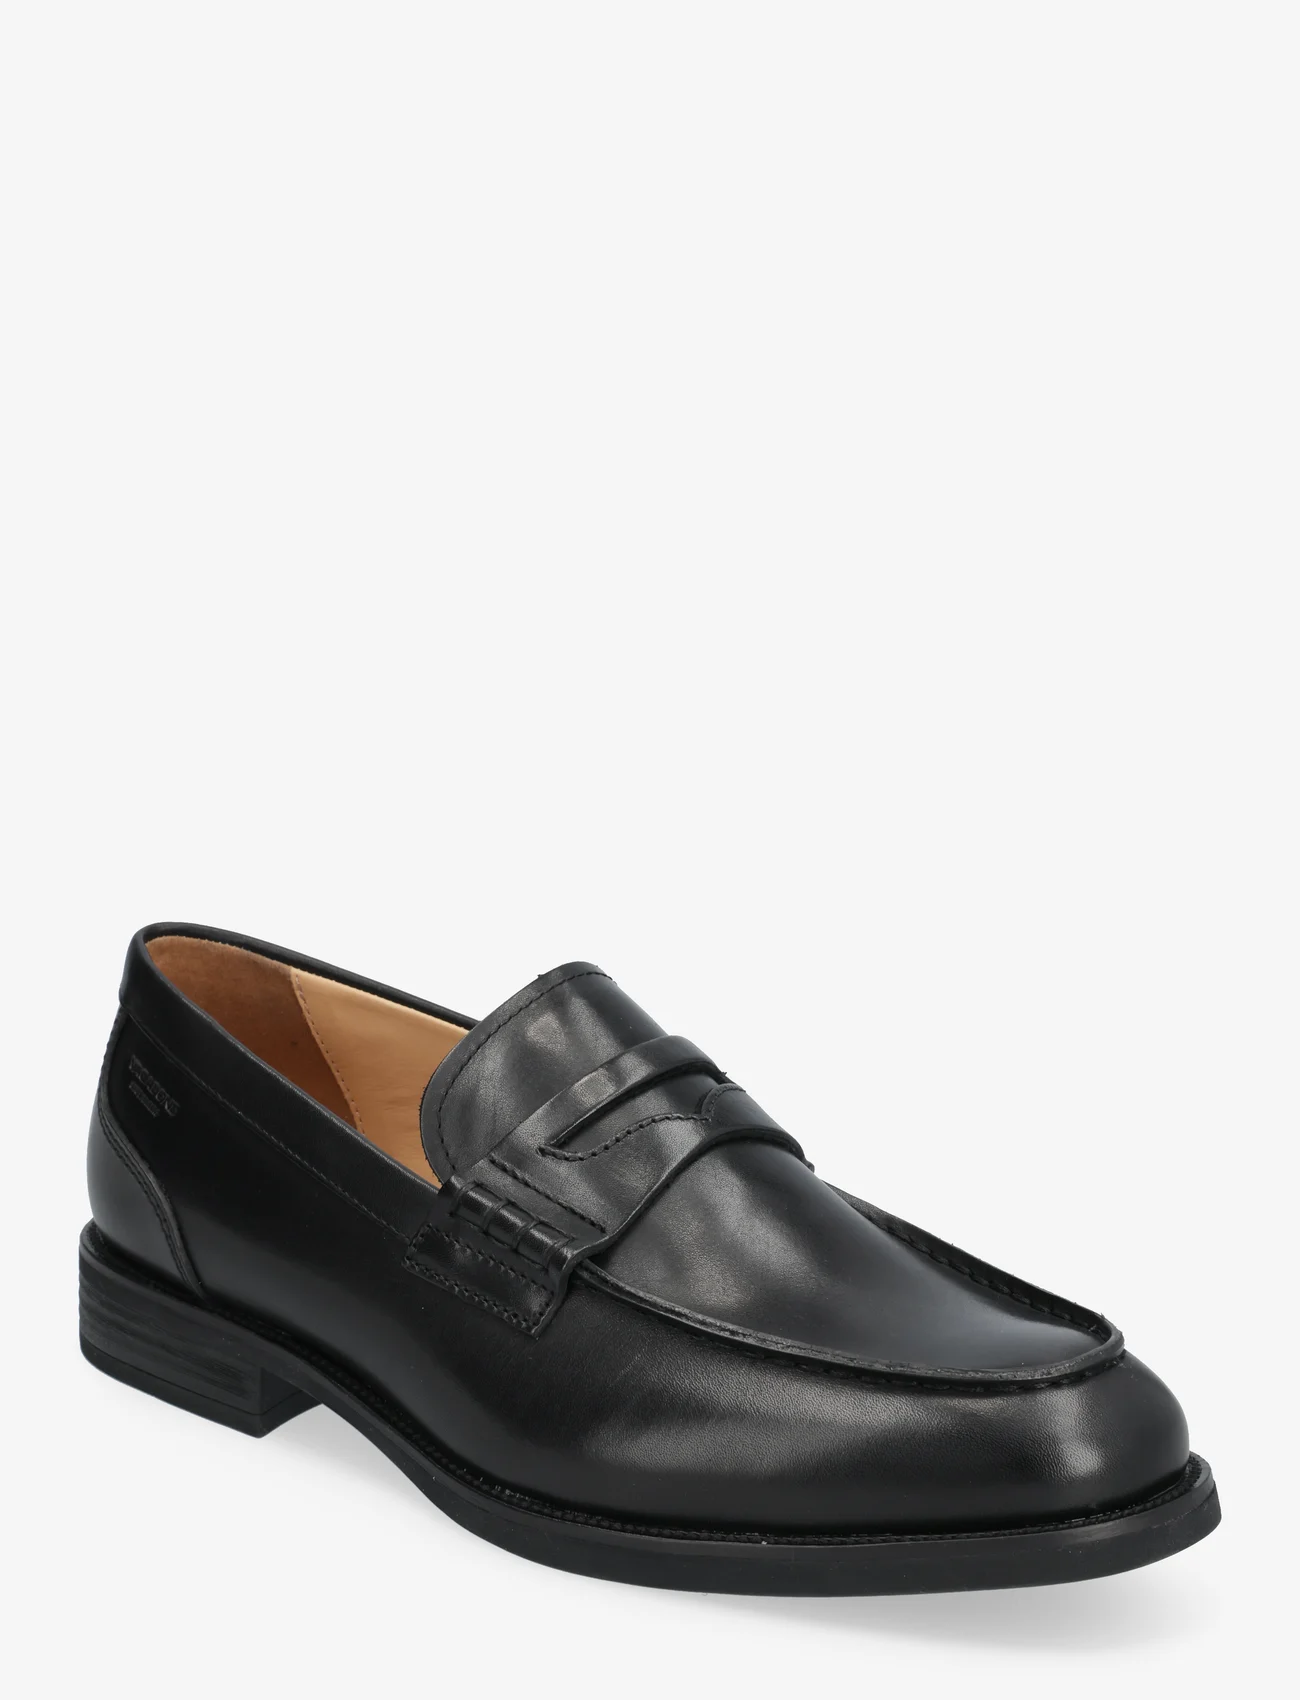 VAGABOND - MARIO - spring shoes - black - 0